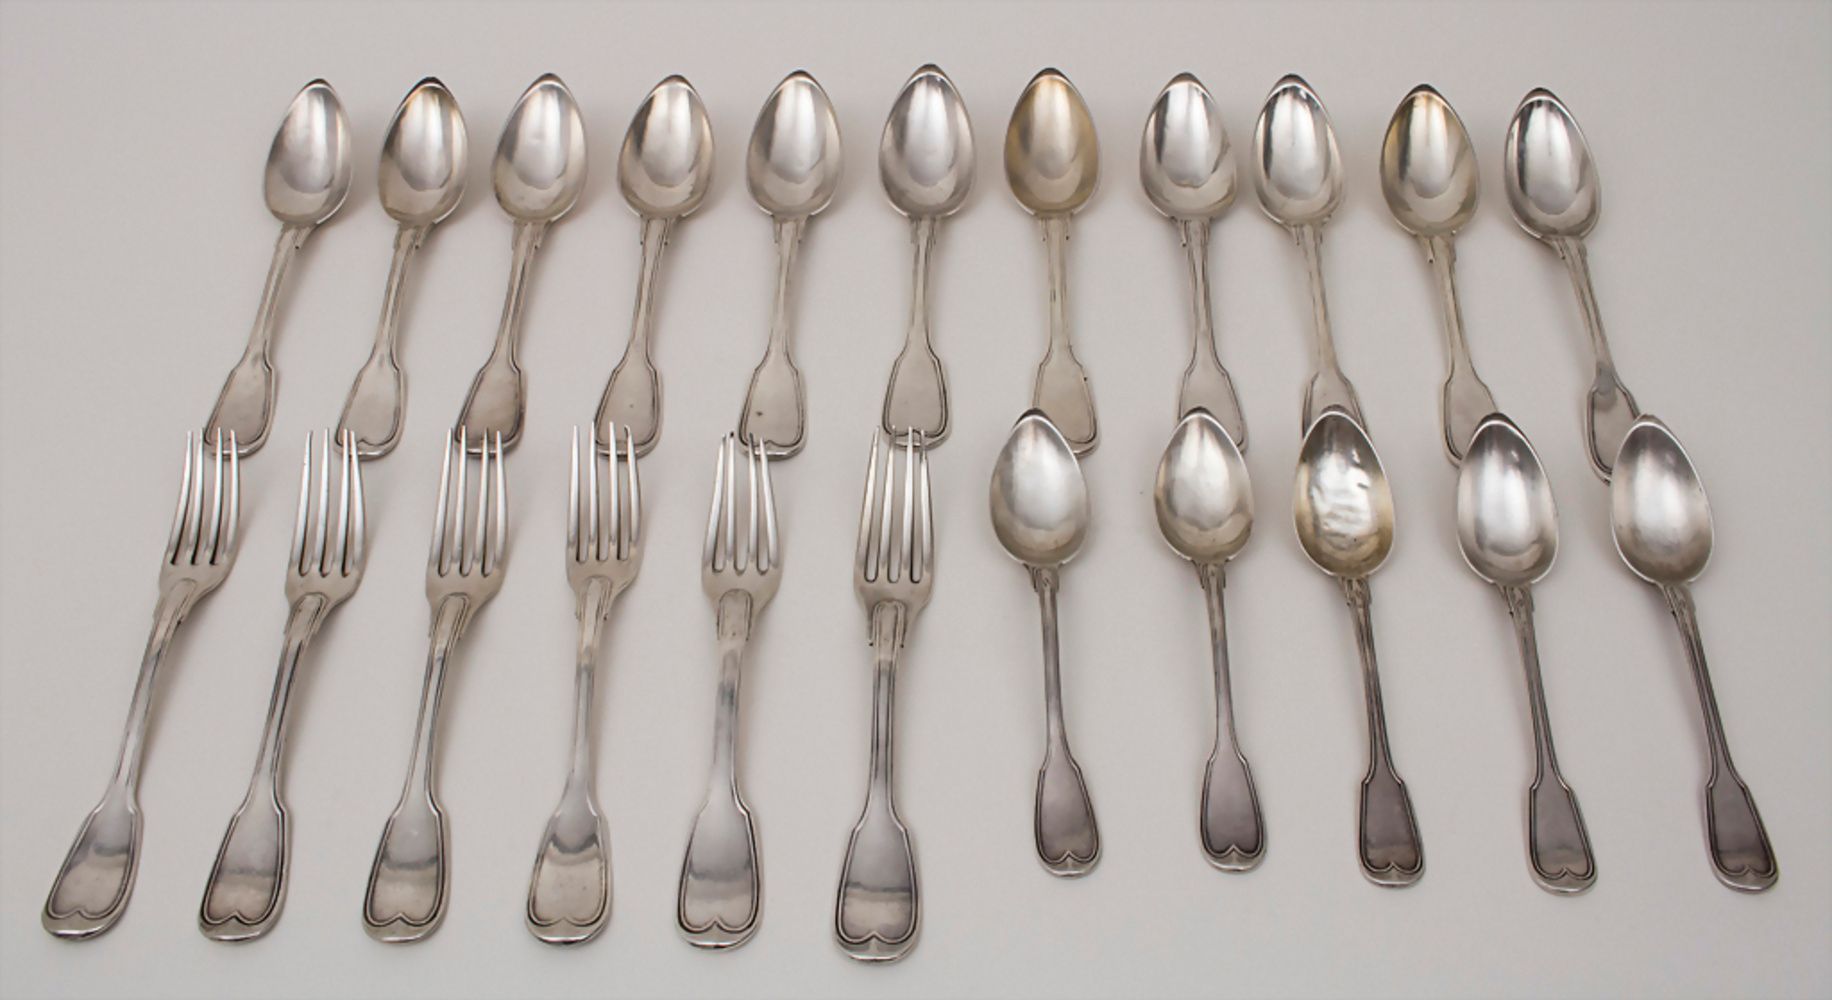 Restbesteck / Silver cutlery, Paris, 19. Jh Materiale: argento 950/1000, 16 cucc&hellip;